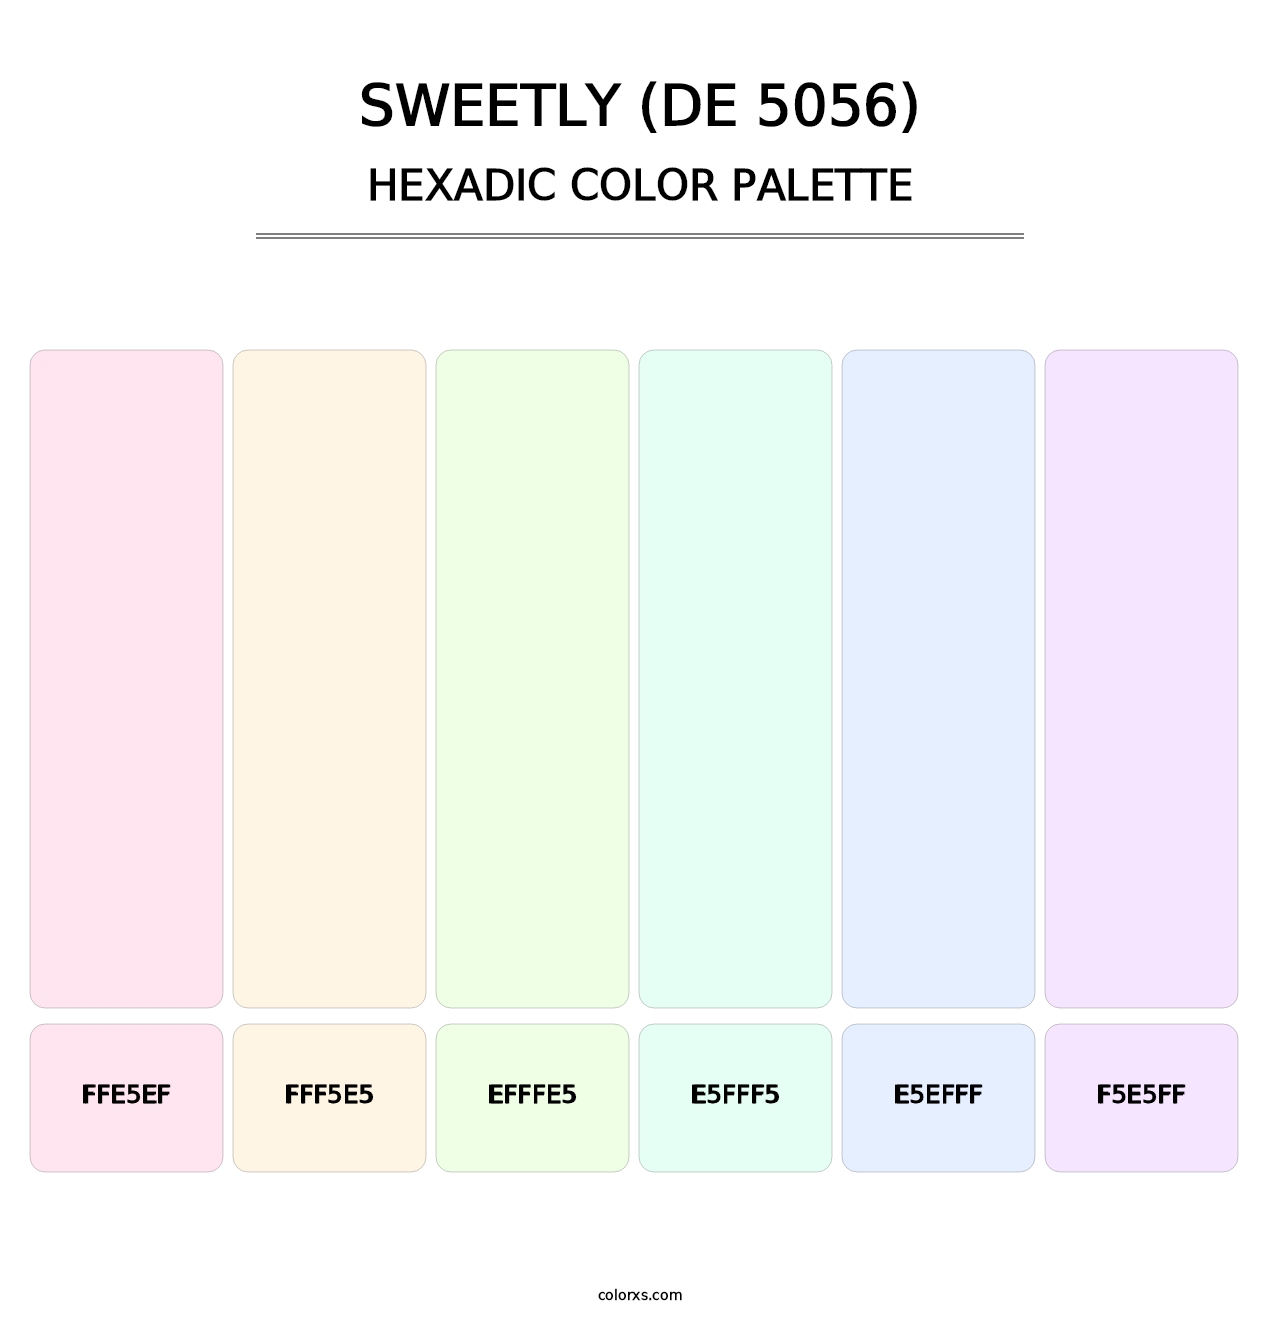 Sweetly (DE 5056) - Hexadic Color Palette